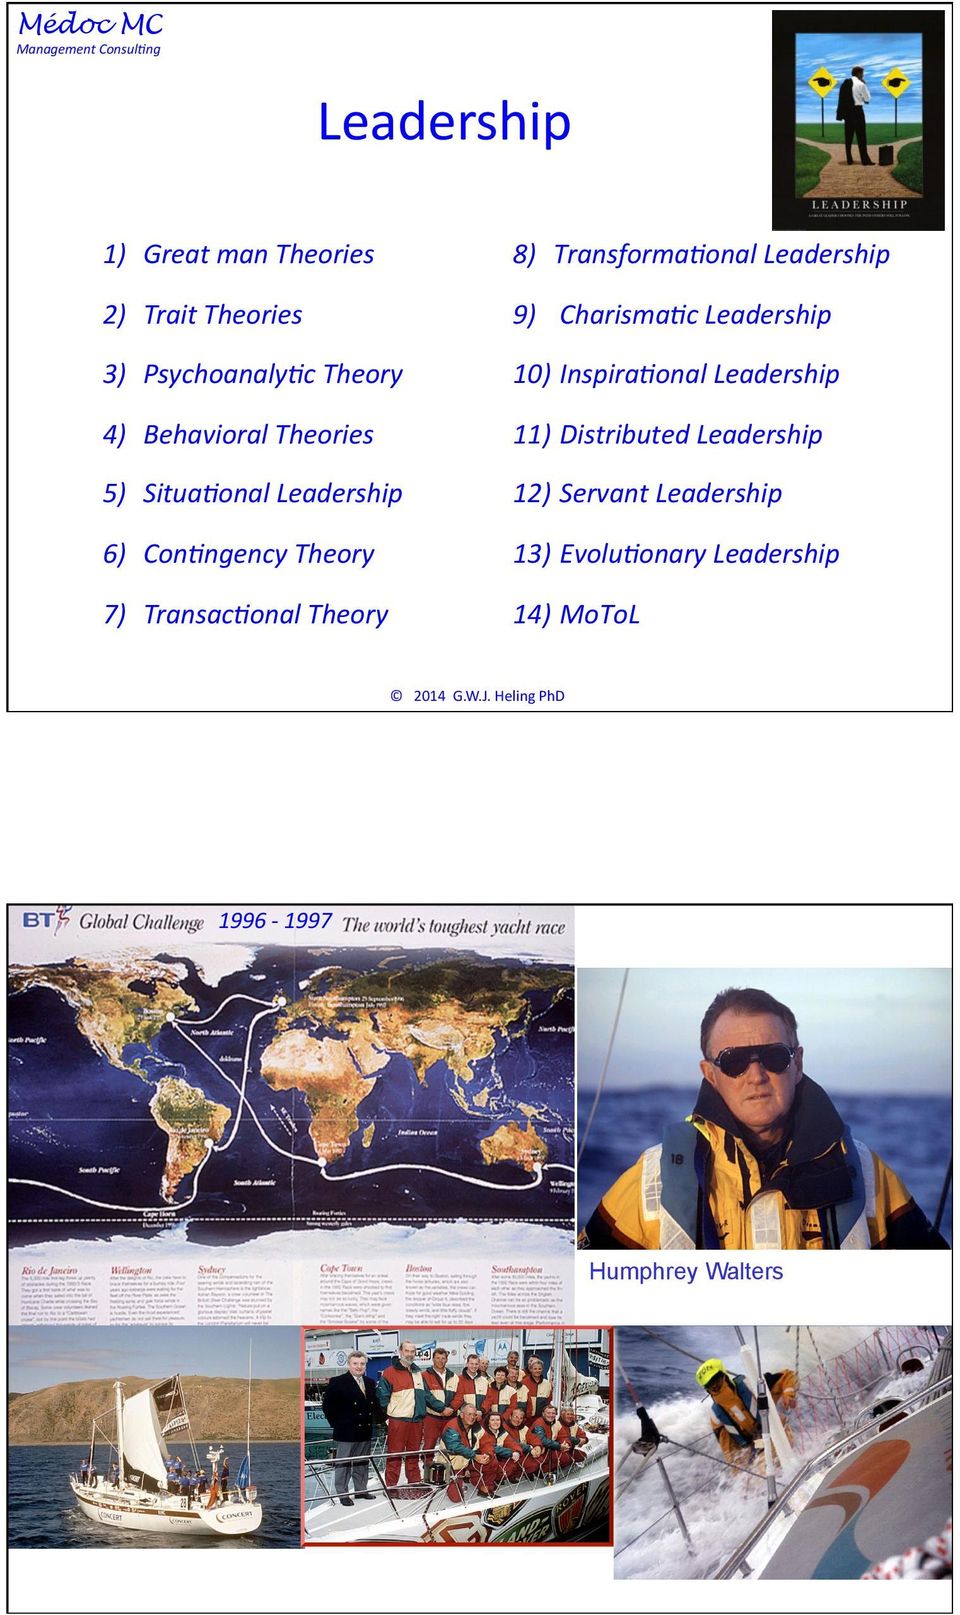 onal Leadership 4) Behavioral Theories 11) Distributed Leadership 5) Situa.